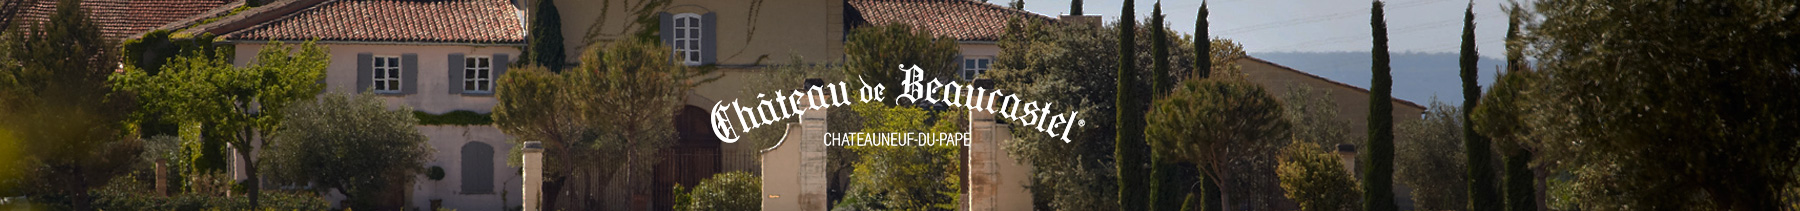 Château de Beaucastel